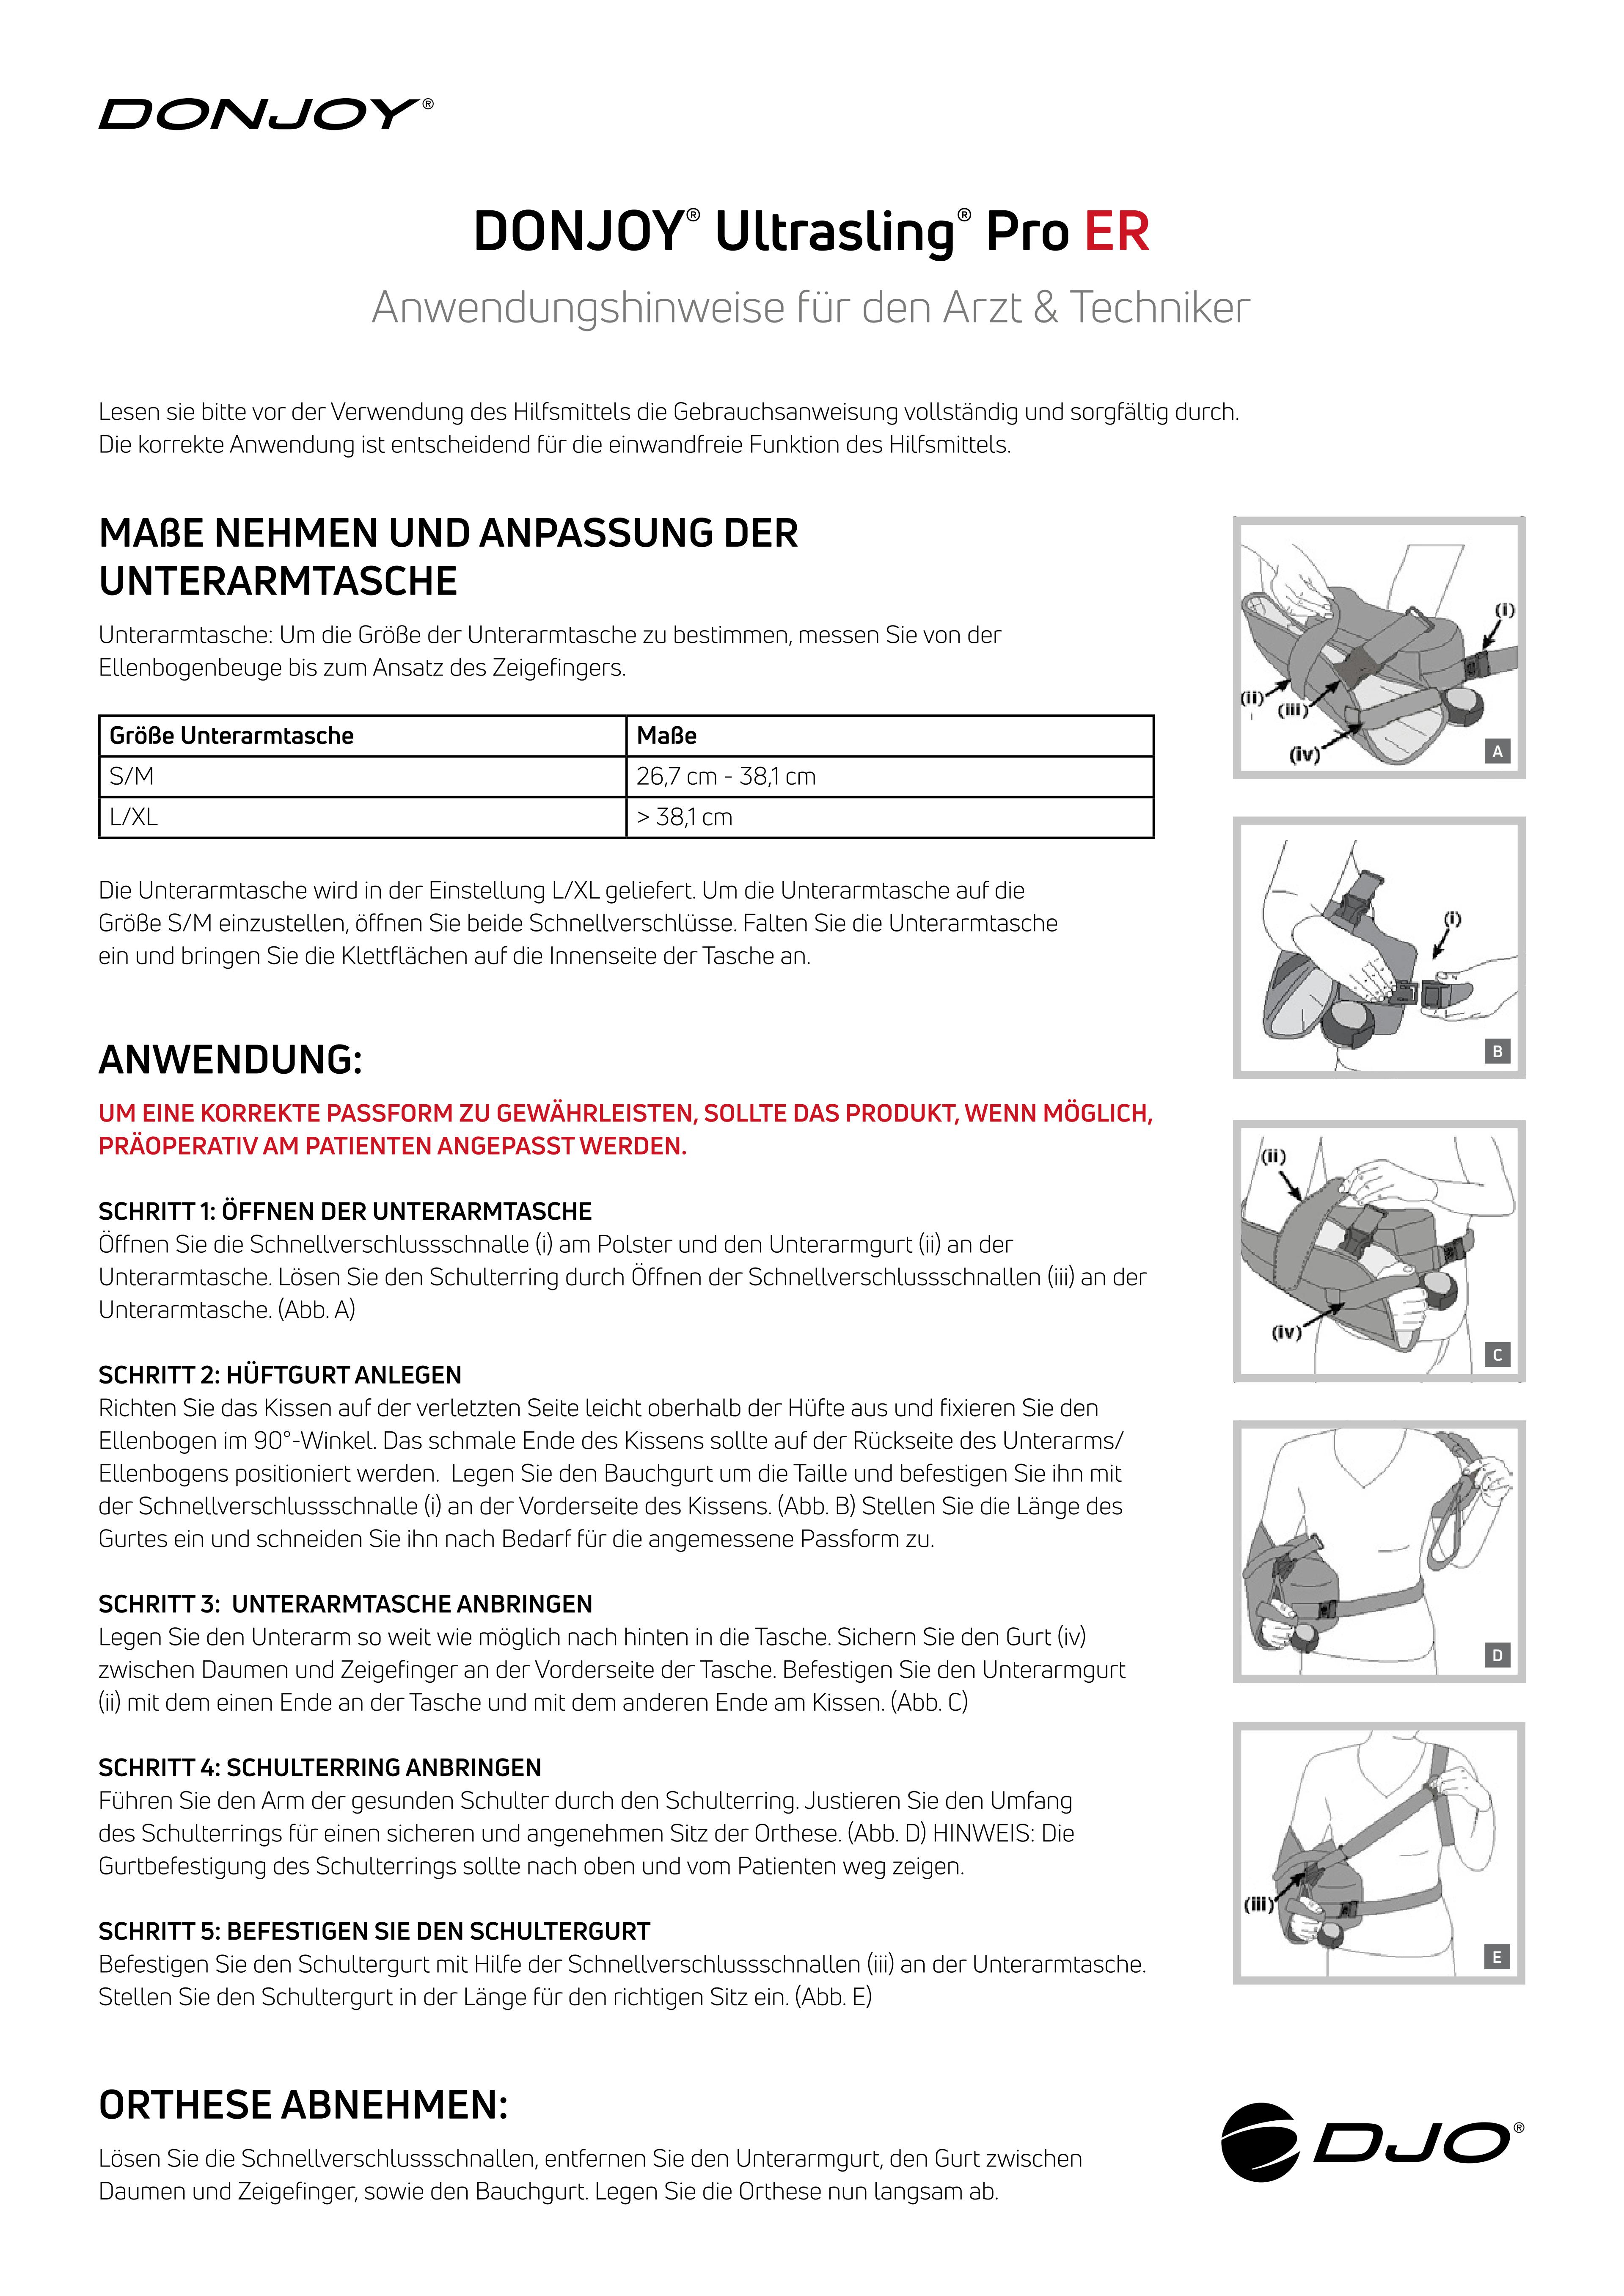 MKT-OT-0267 Anwendungshinweise DONJOY Ultrasling PRO ER.pdf